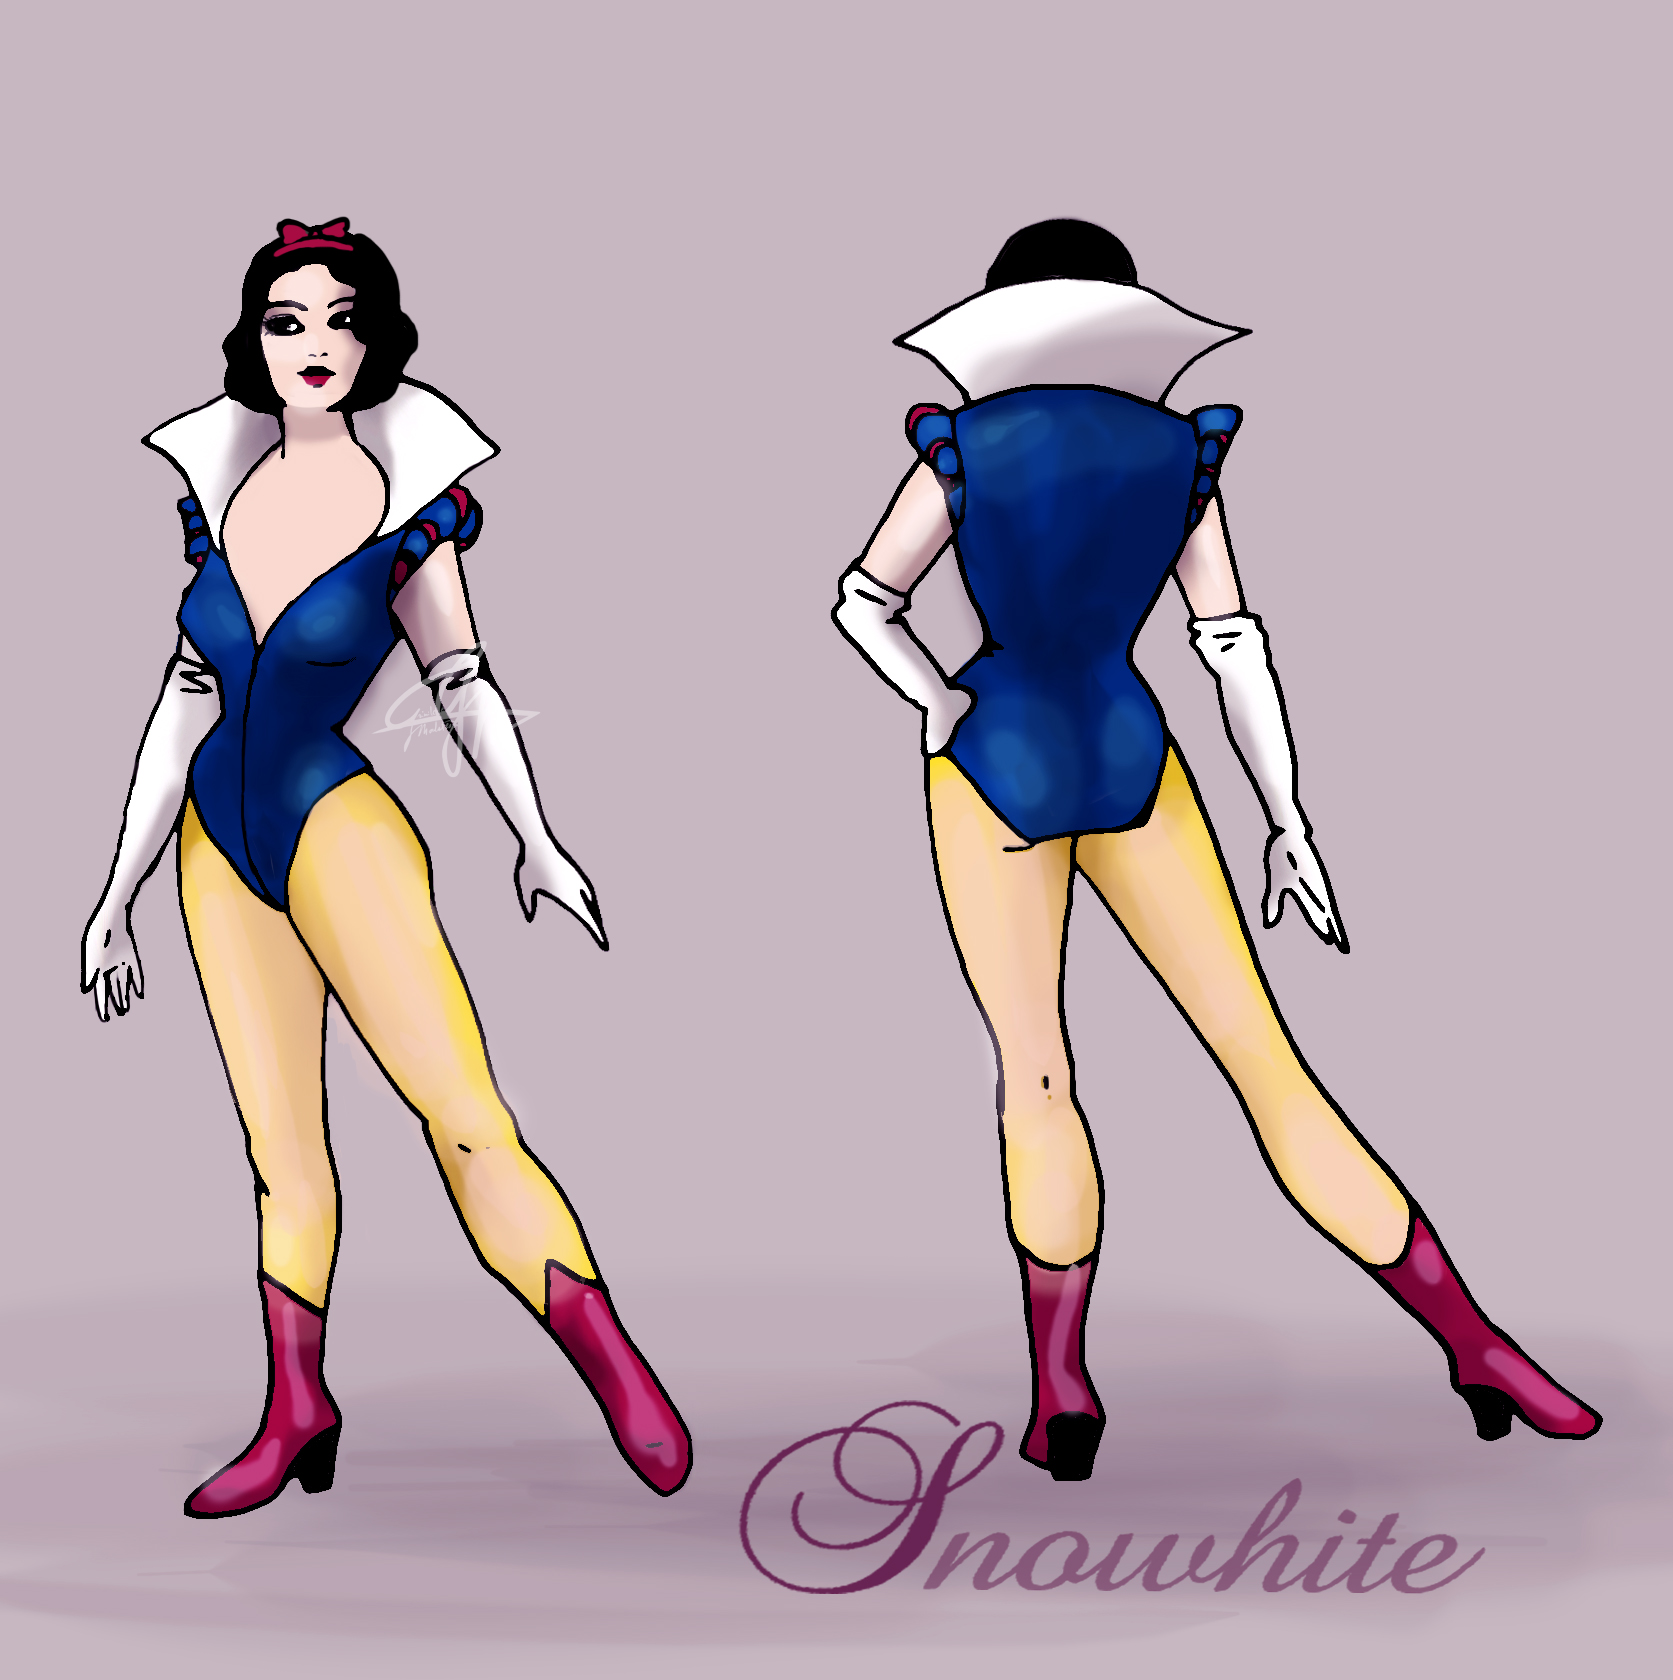 Disney superhero princesses - Grimilde Malatesta